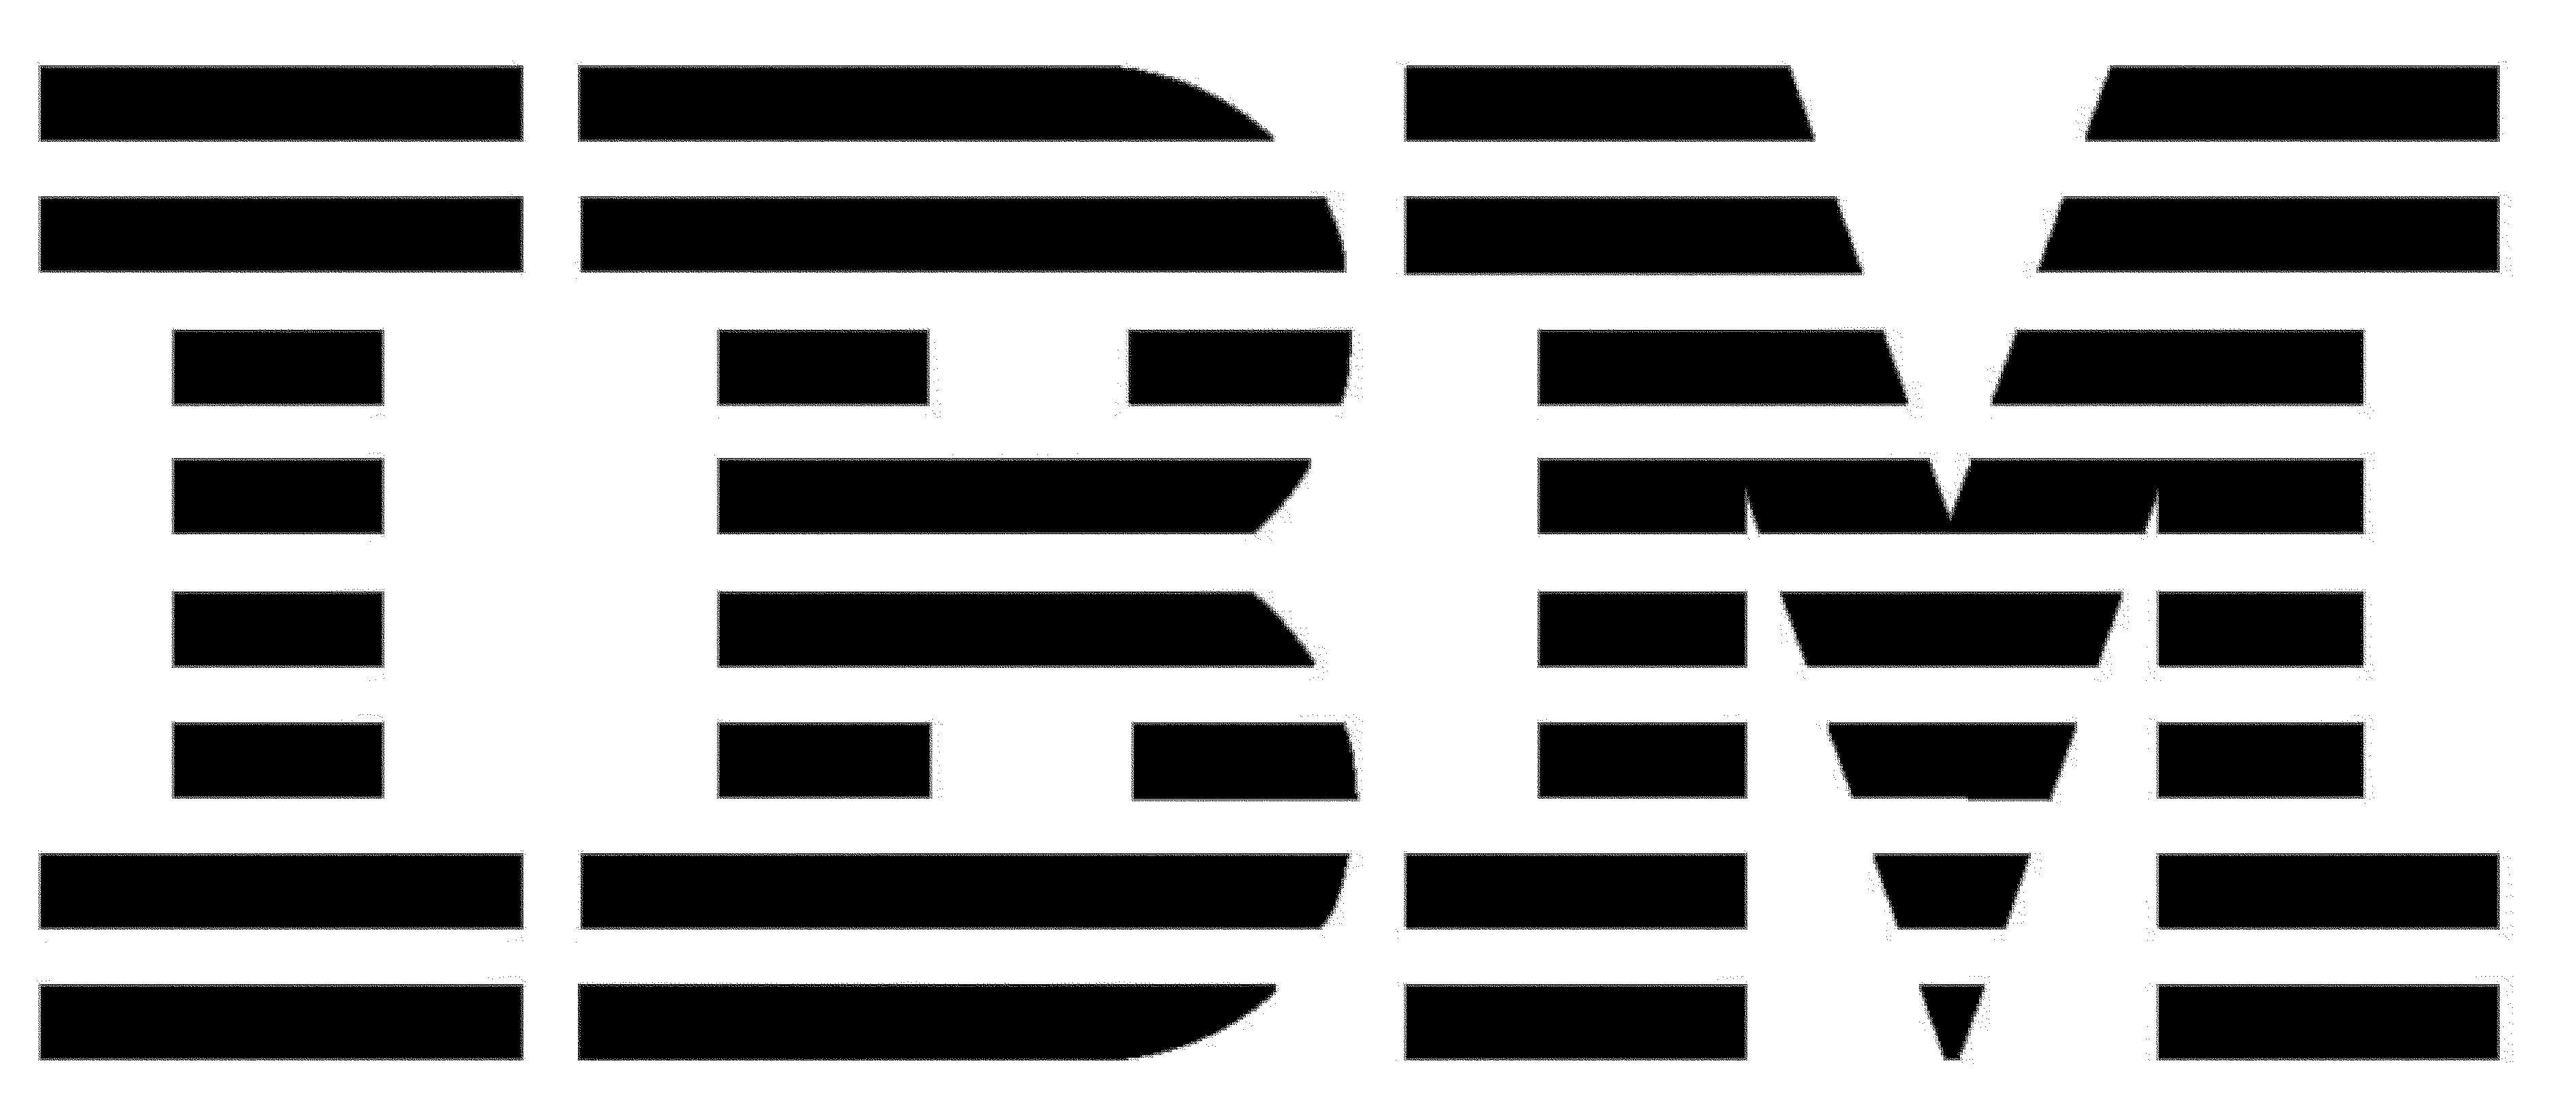 IBM Corporation Logo - Benefits. MaGIC